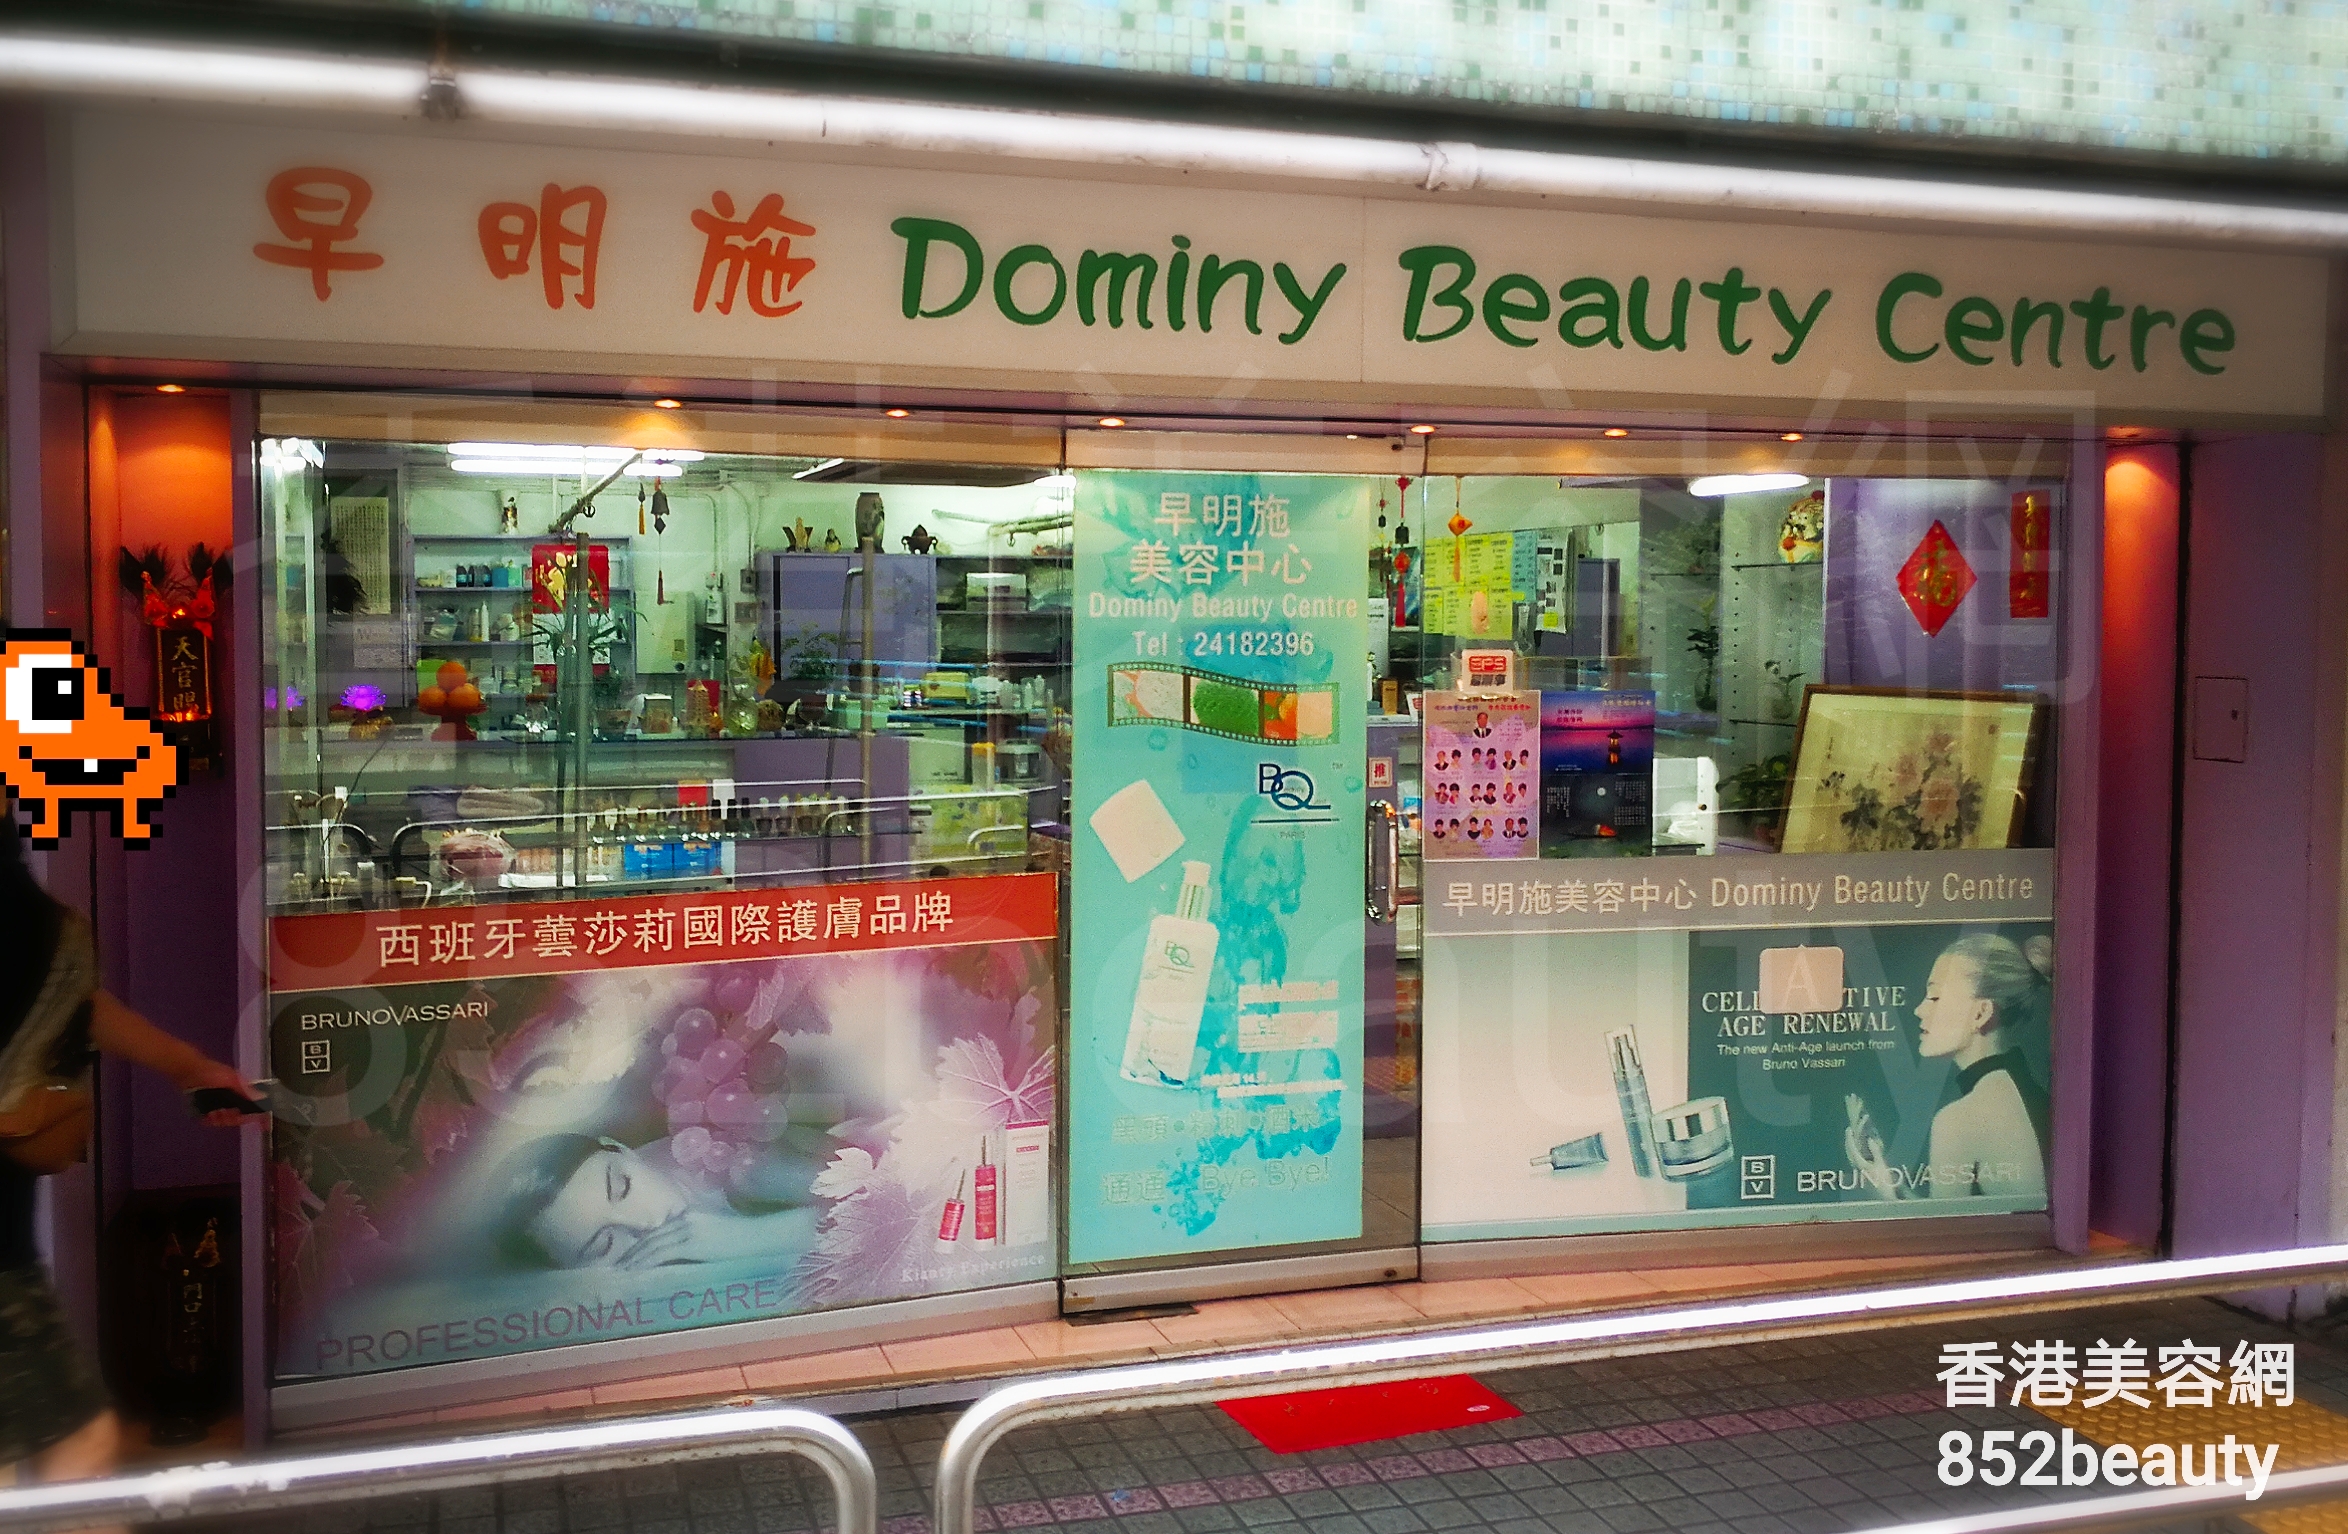 Facial Care: 早明施美容中心 Dominy Beauty Centre